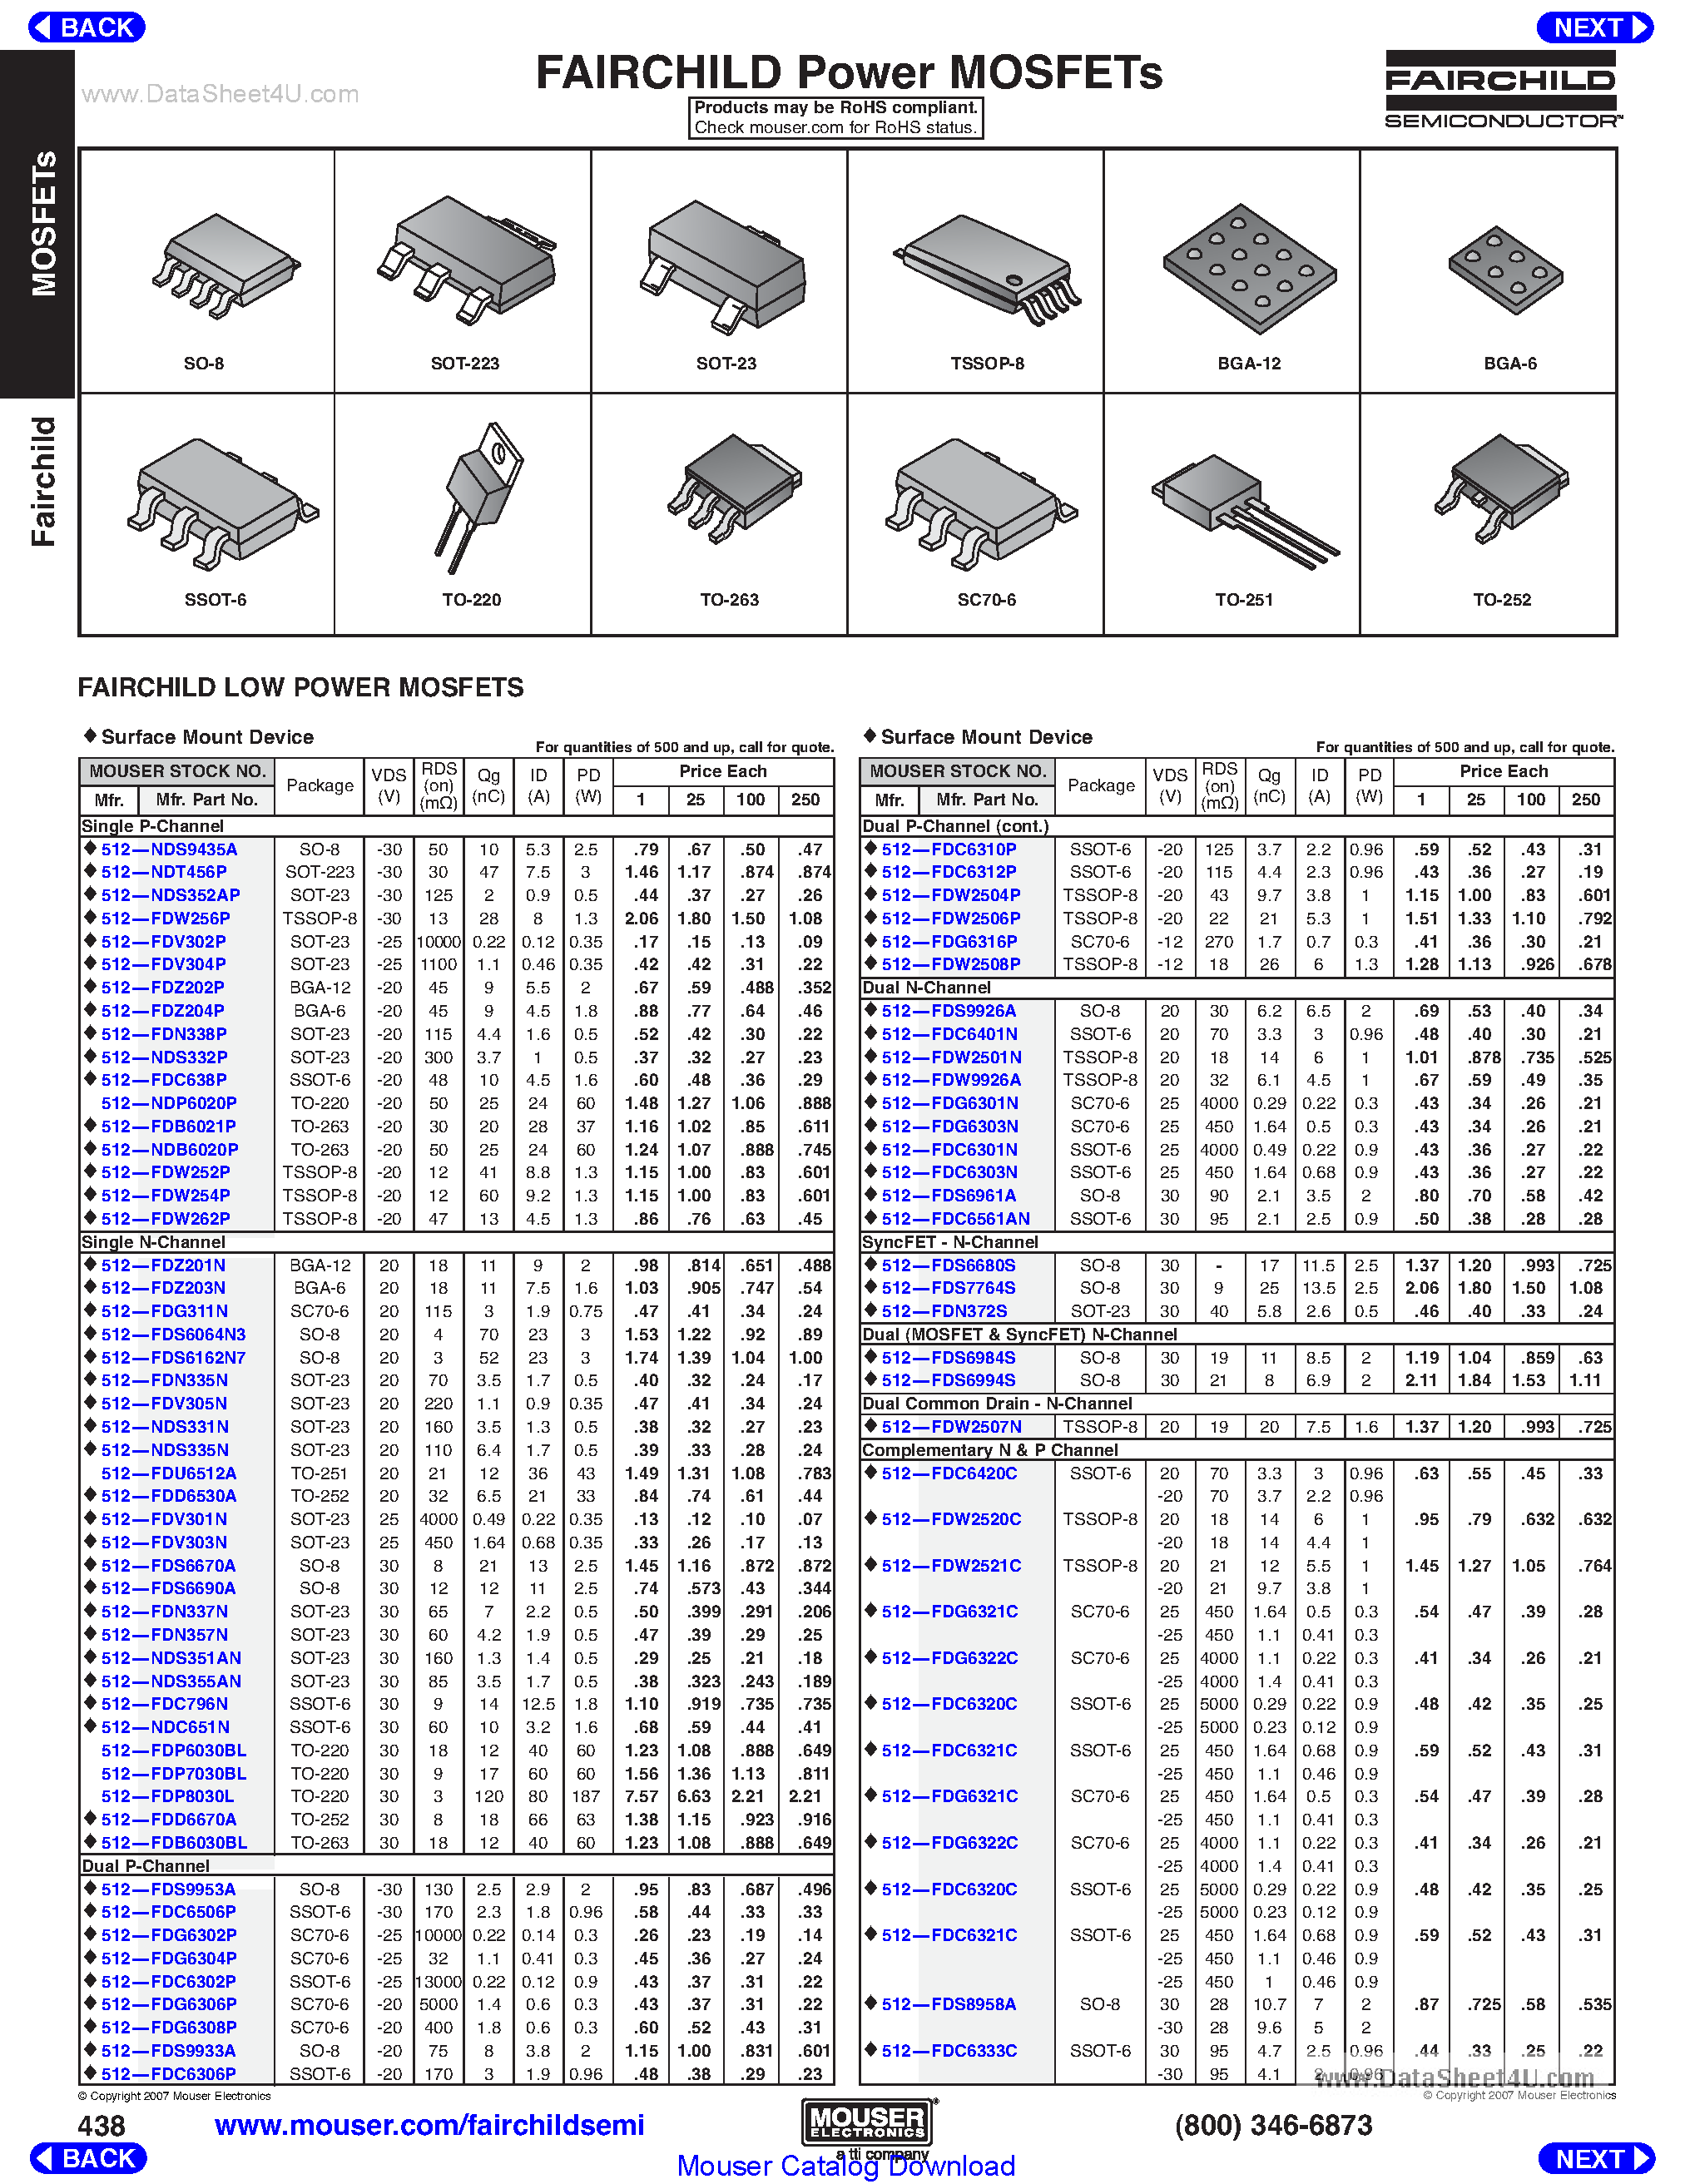 Datasheet 512-FDDxxxxx - Low Power MOSFET page 1